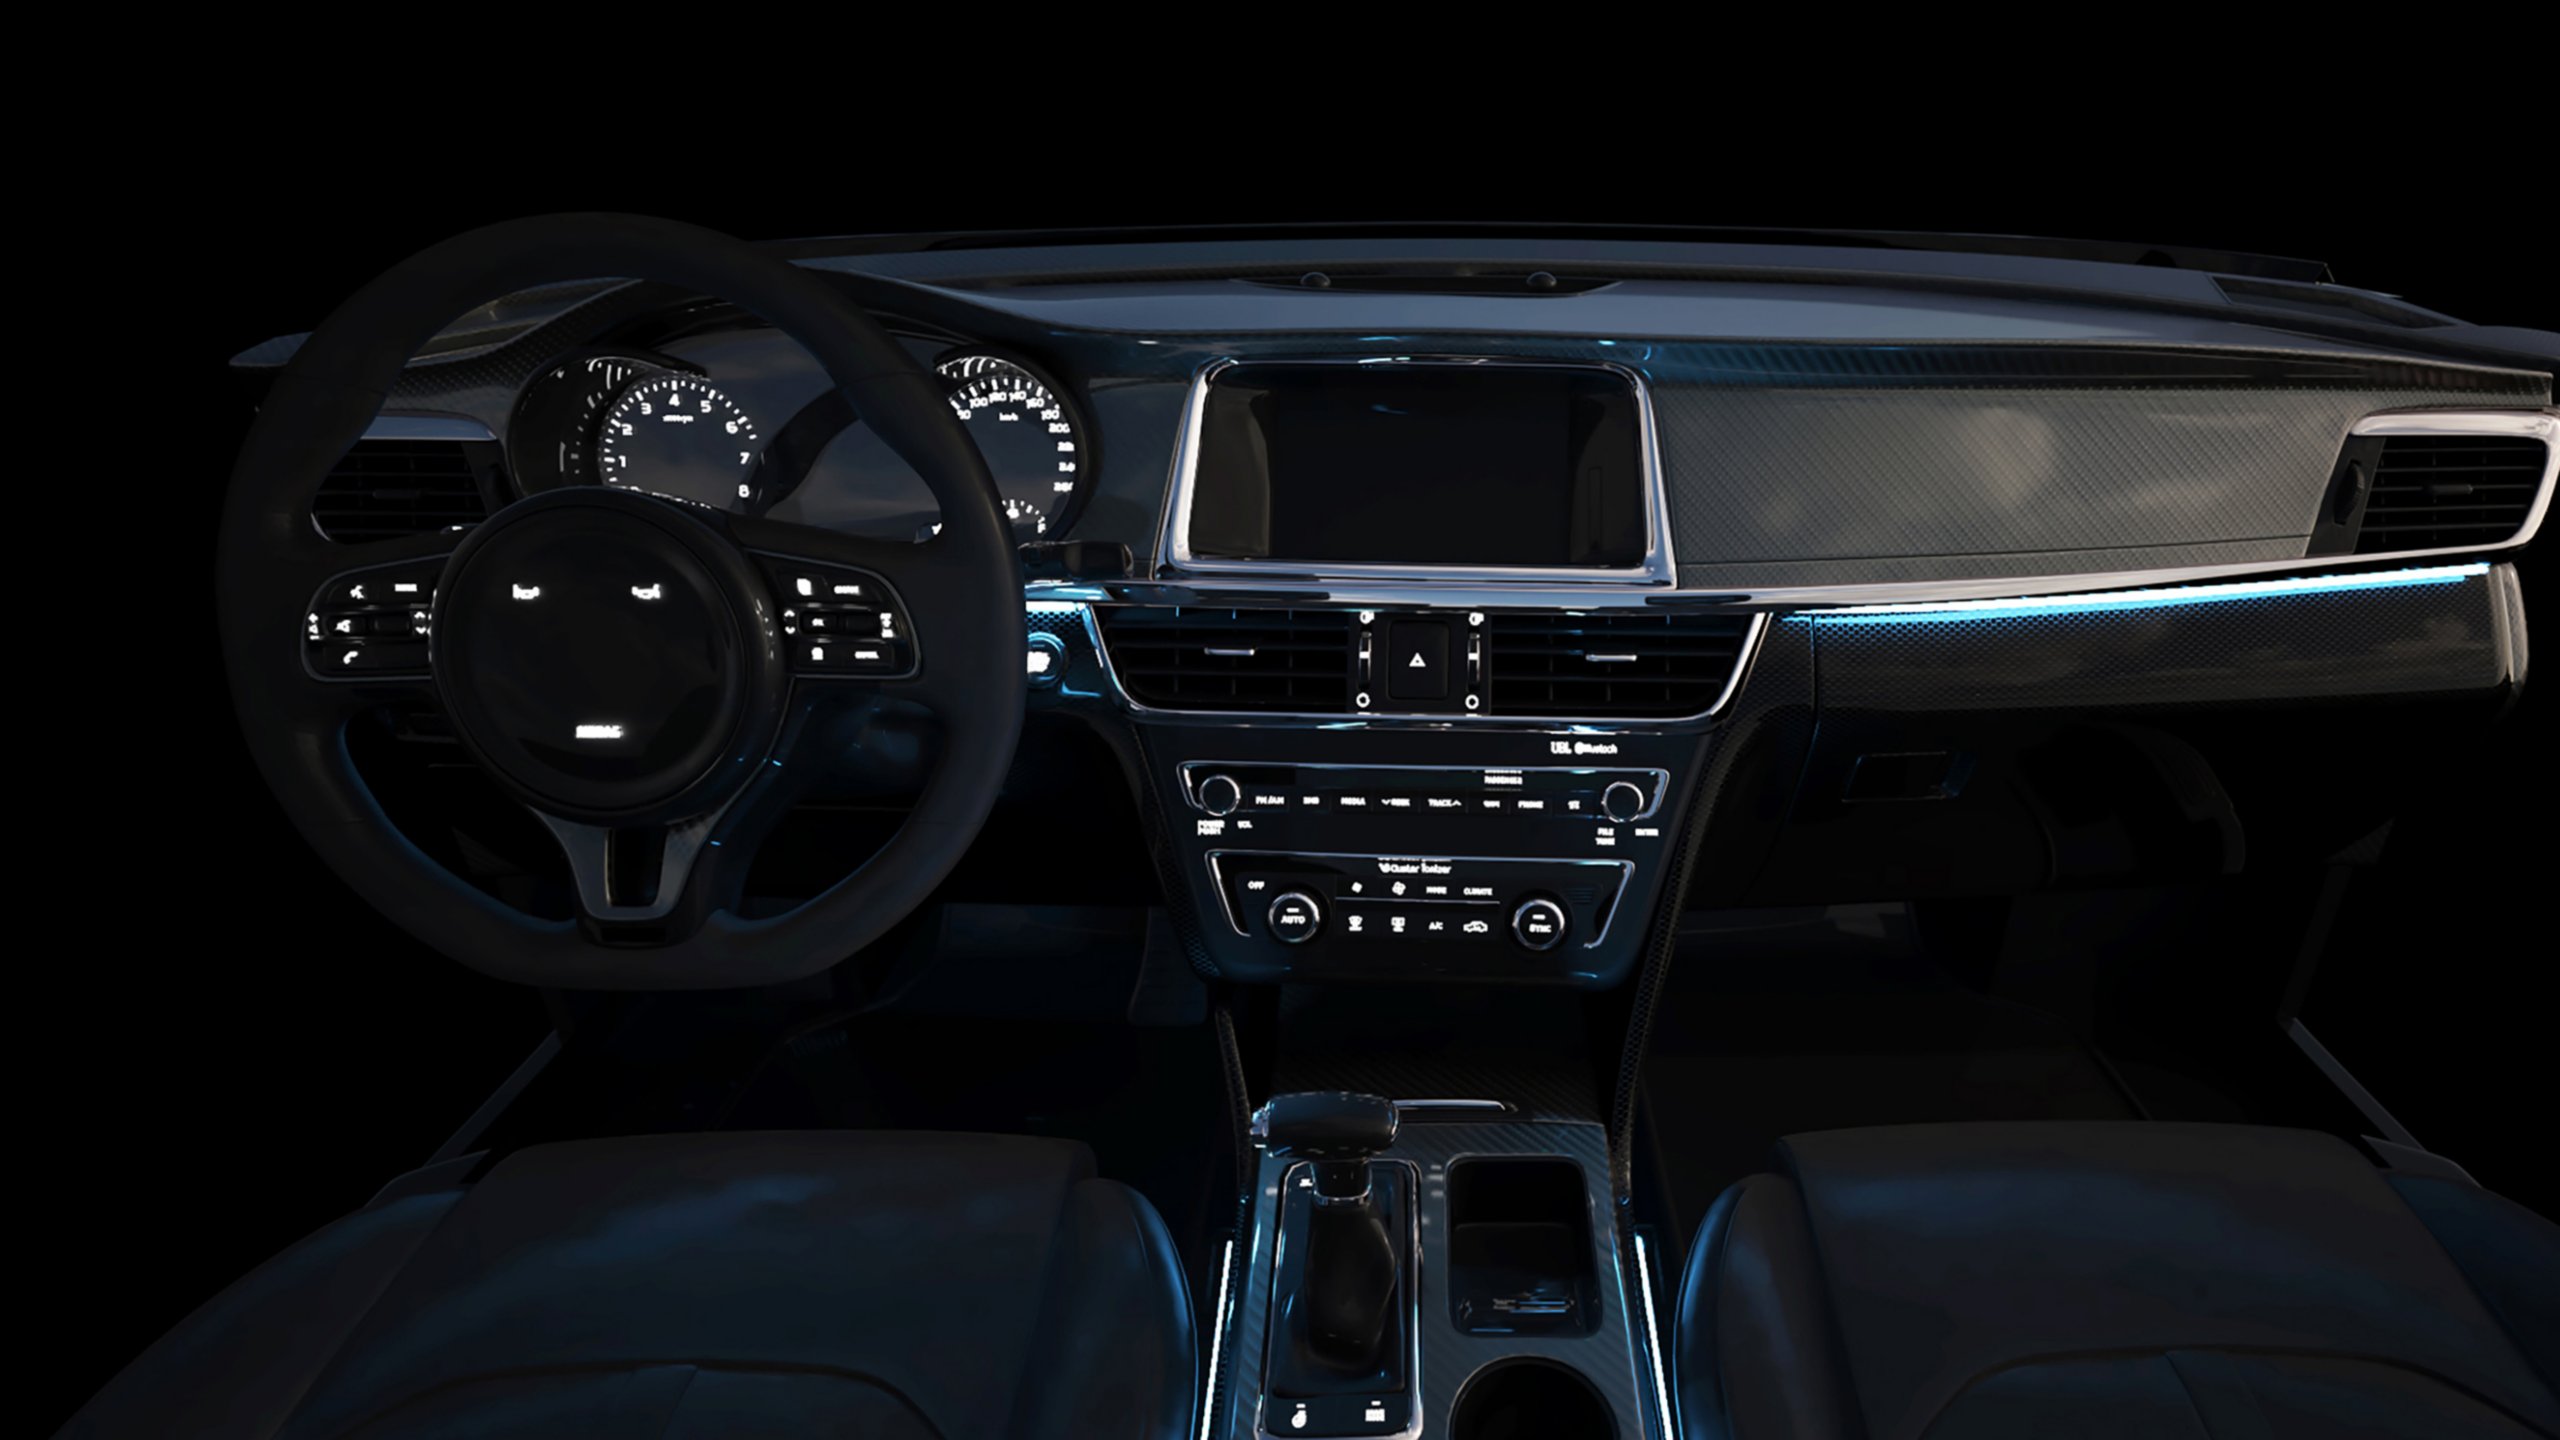 Automobile steering wheel and interior control panel